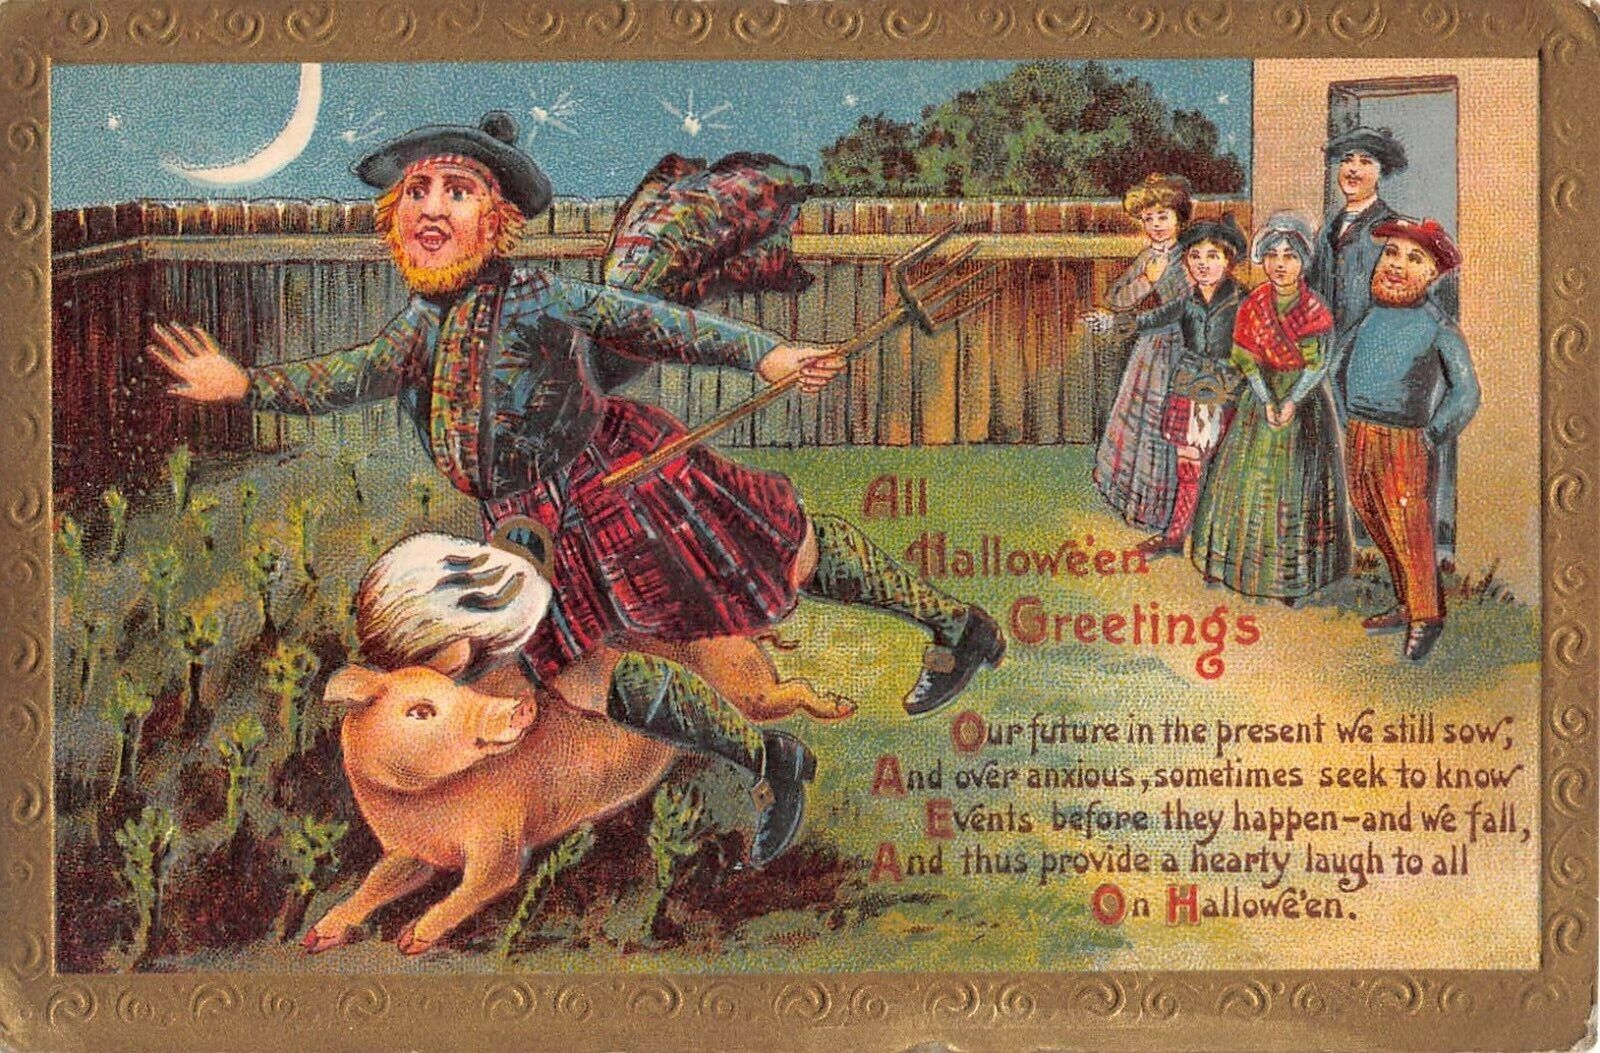 c.1913 Family Watching Hugging Couple Bat Moon Halloween Greetings post card